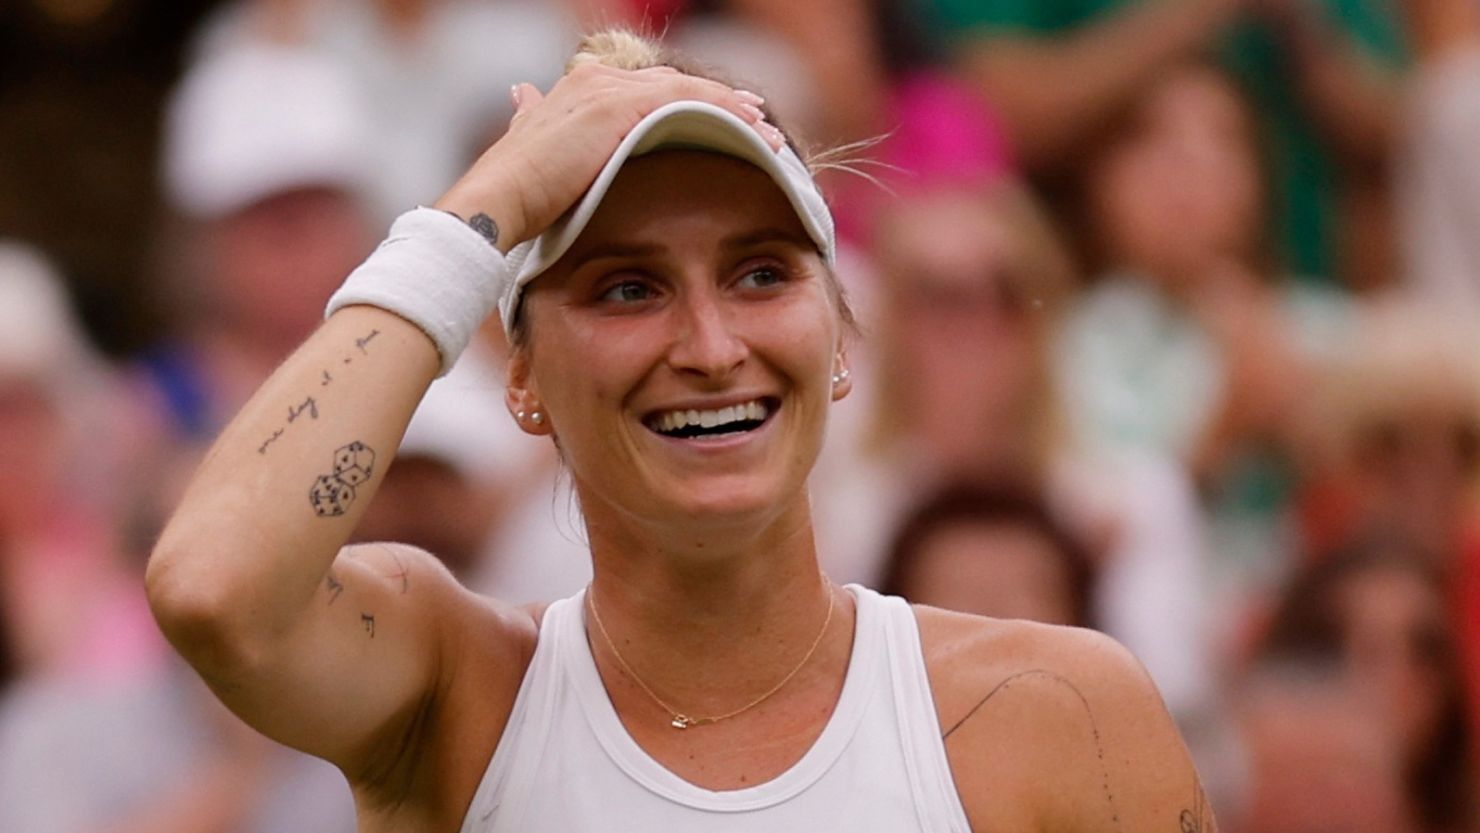 Reigning Wimbledon Champion Vondroušová Loses At The Start Of The Tournament